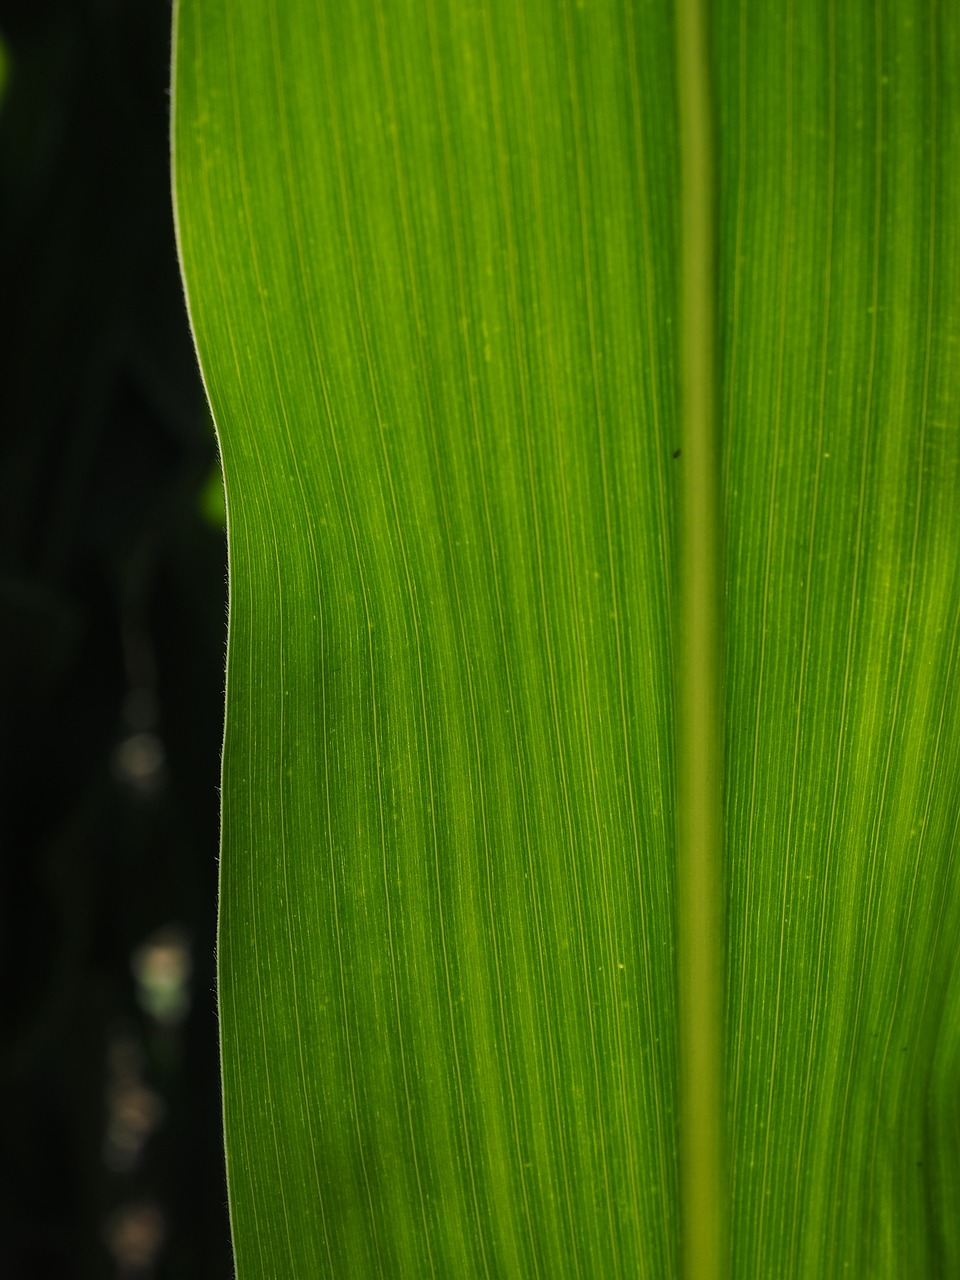 corn leaf detail leaf veins free photo